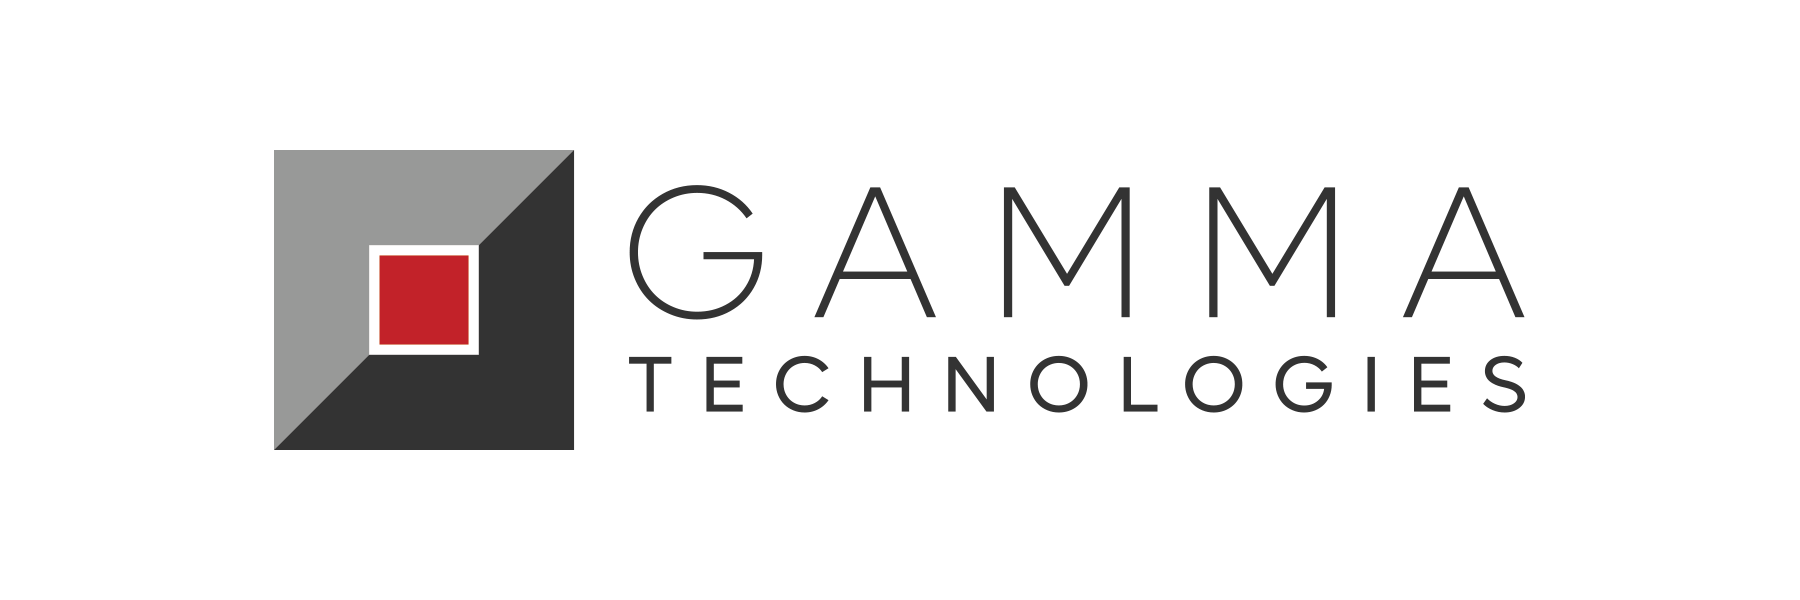 GAMMA Technologies logo